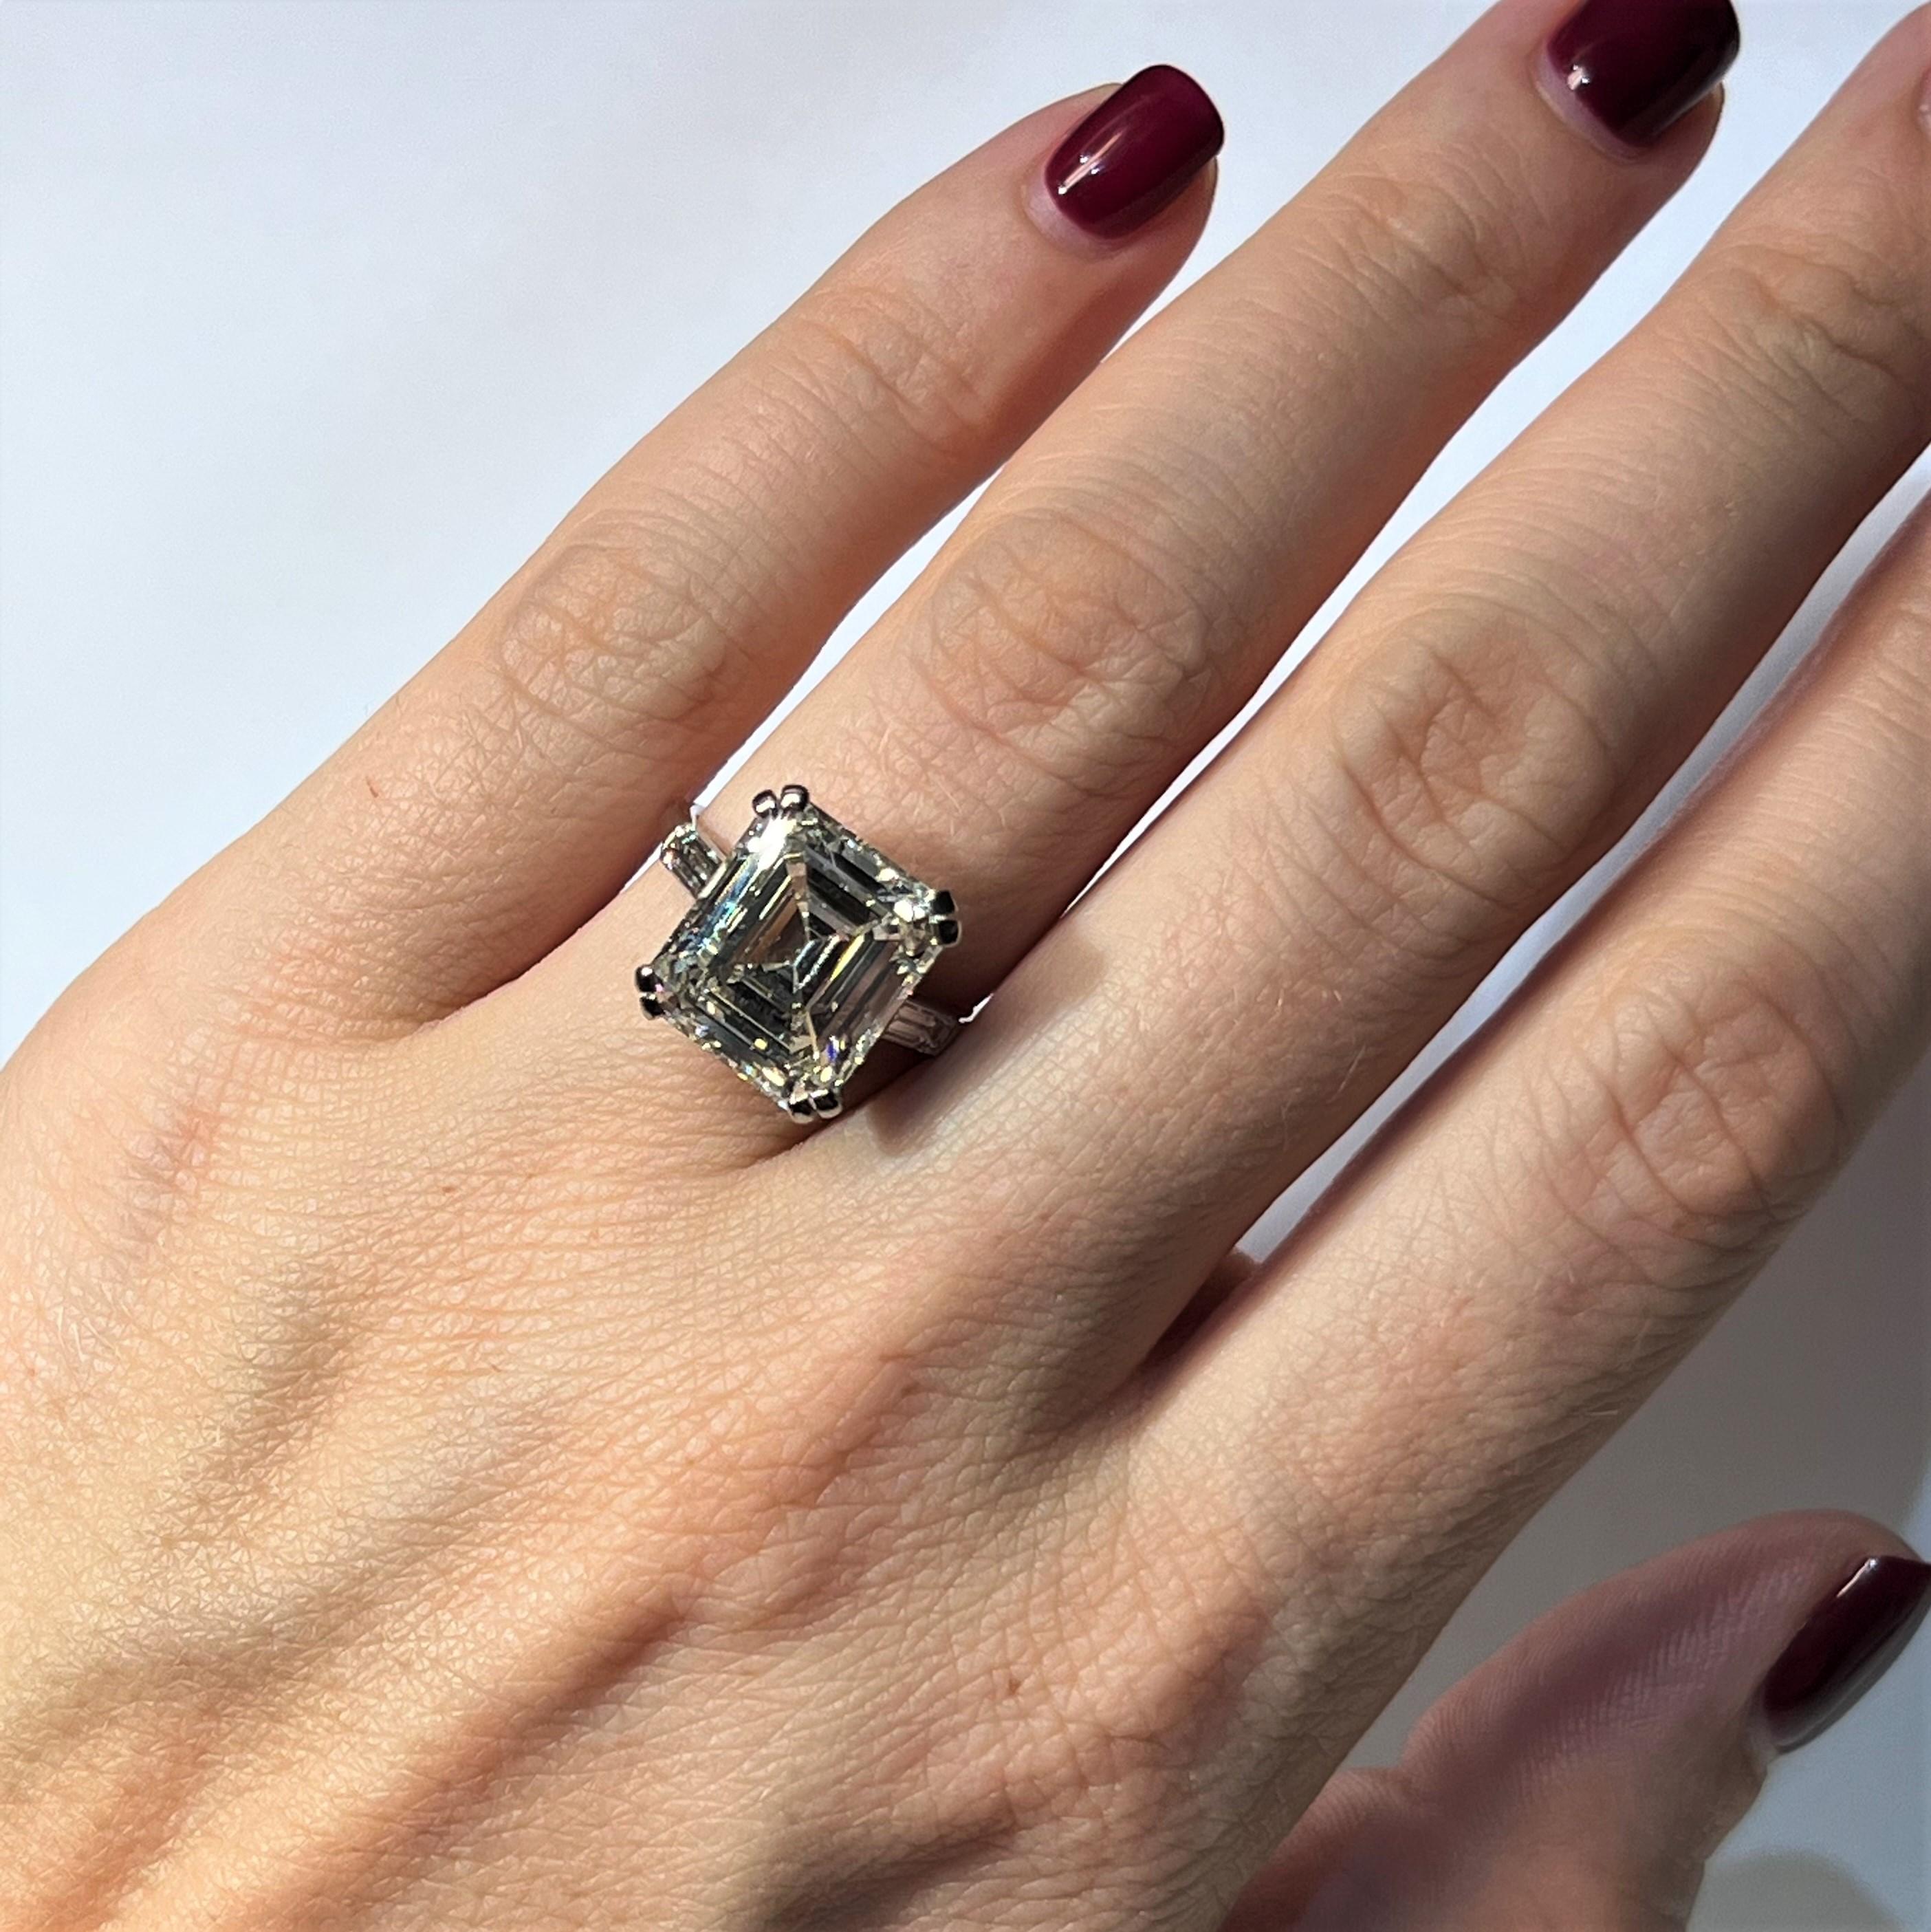 Stunning 7.34 Ct GIA Certified Emerald-Cut Diamond Ring in Platinum 950 4